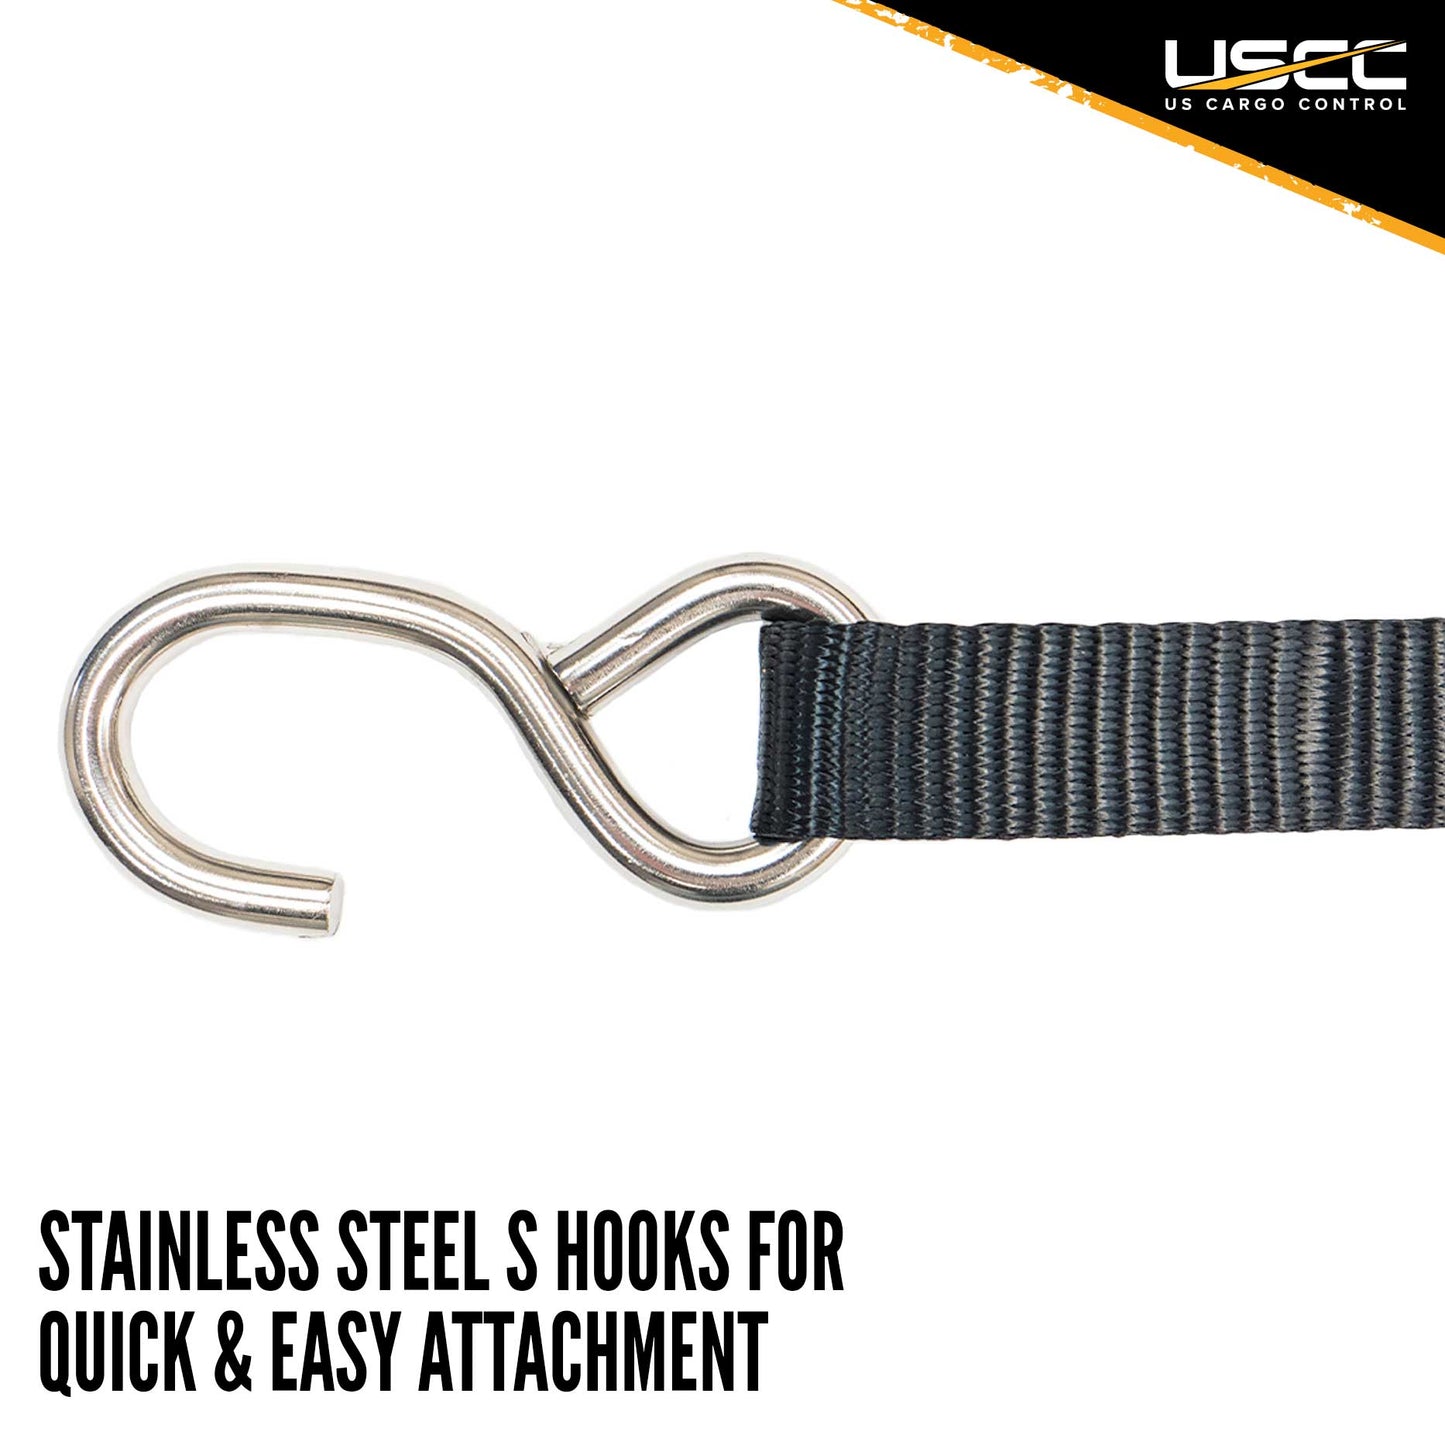 1" x 10' Black Stainless Steel Thumb Ratchet Strap w/ S-Hooks